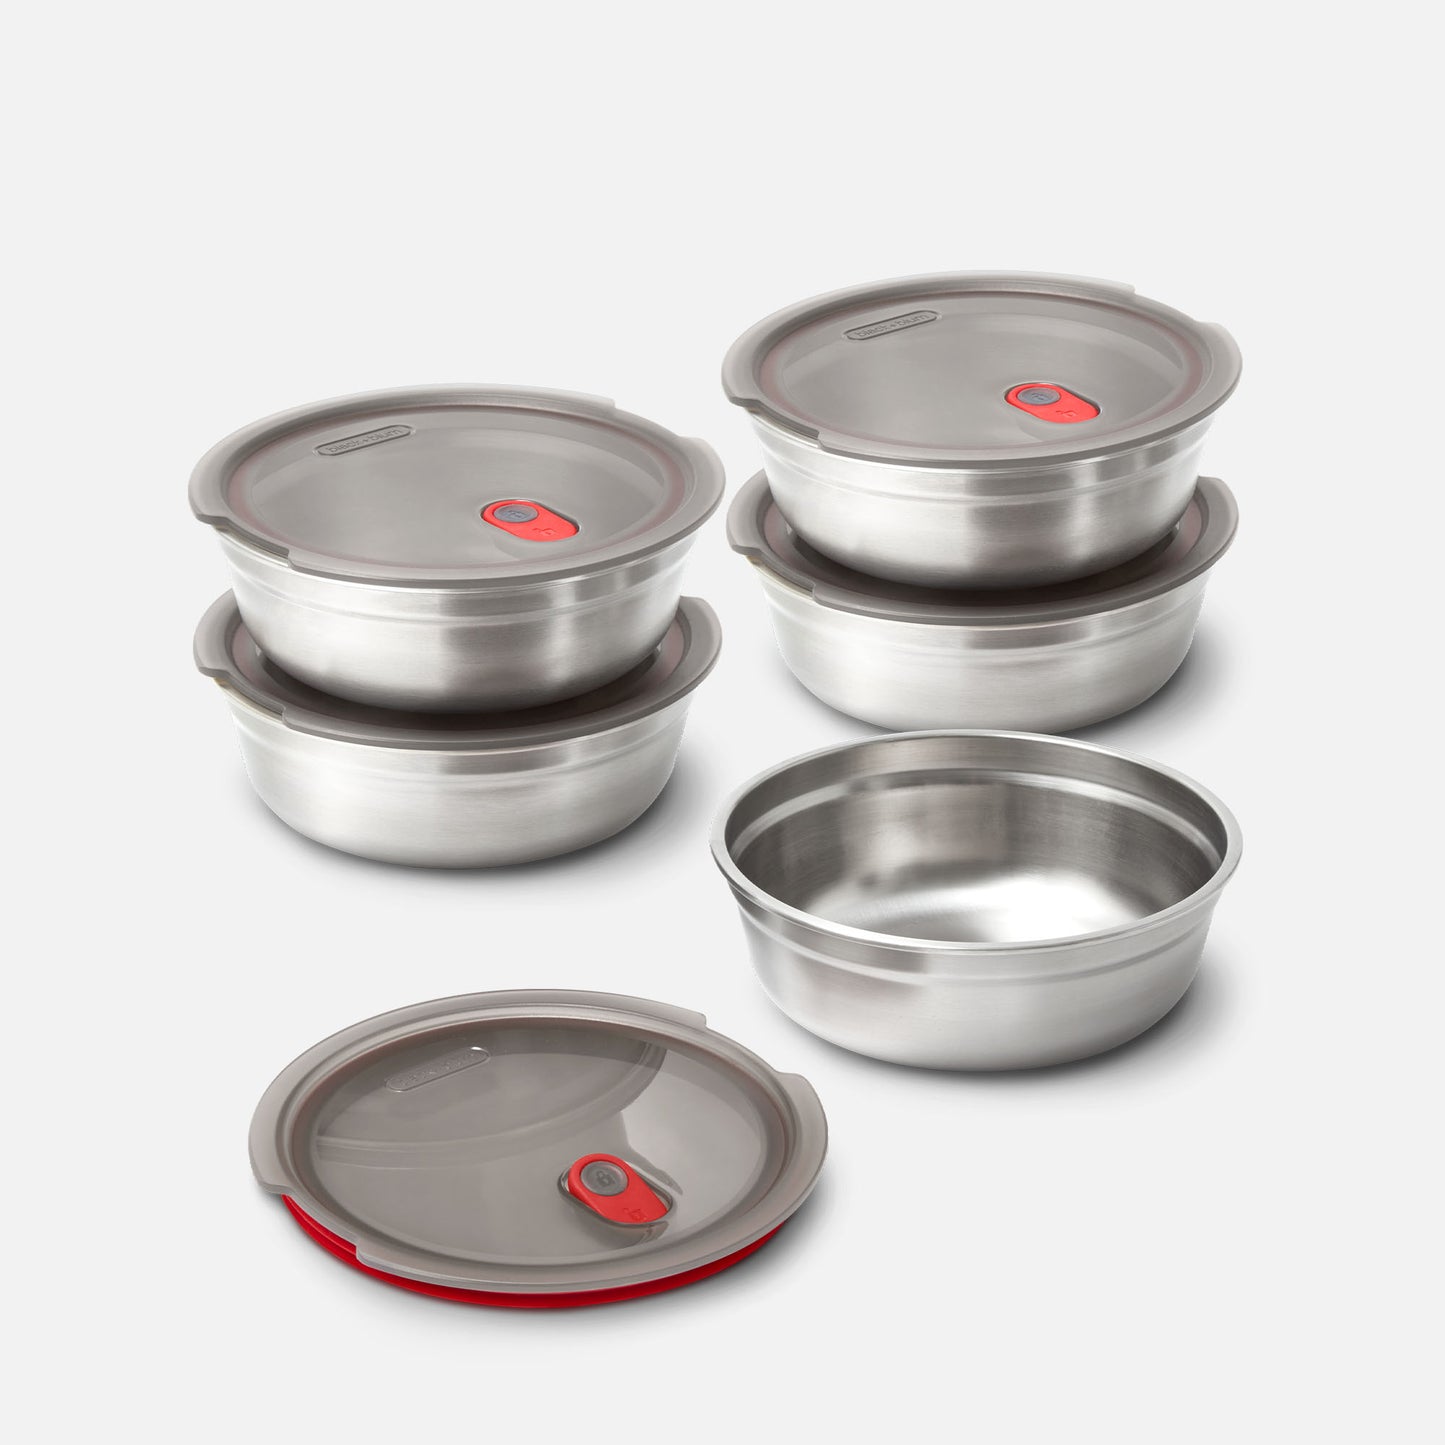 COKUMA 10PCS Bowl Set, Prep Bowls with Lids (5 Bowls and 5 Lids), Reusable,  Microwaveable, Durable, BPA-Free, Freezer and Dishwasher Safe Meal Prep